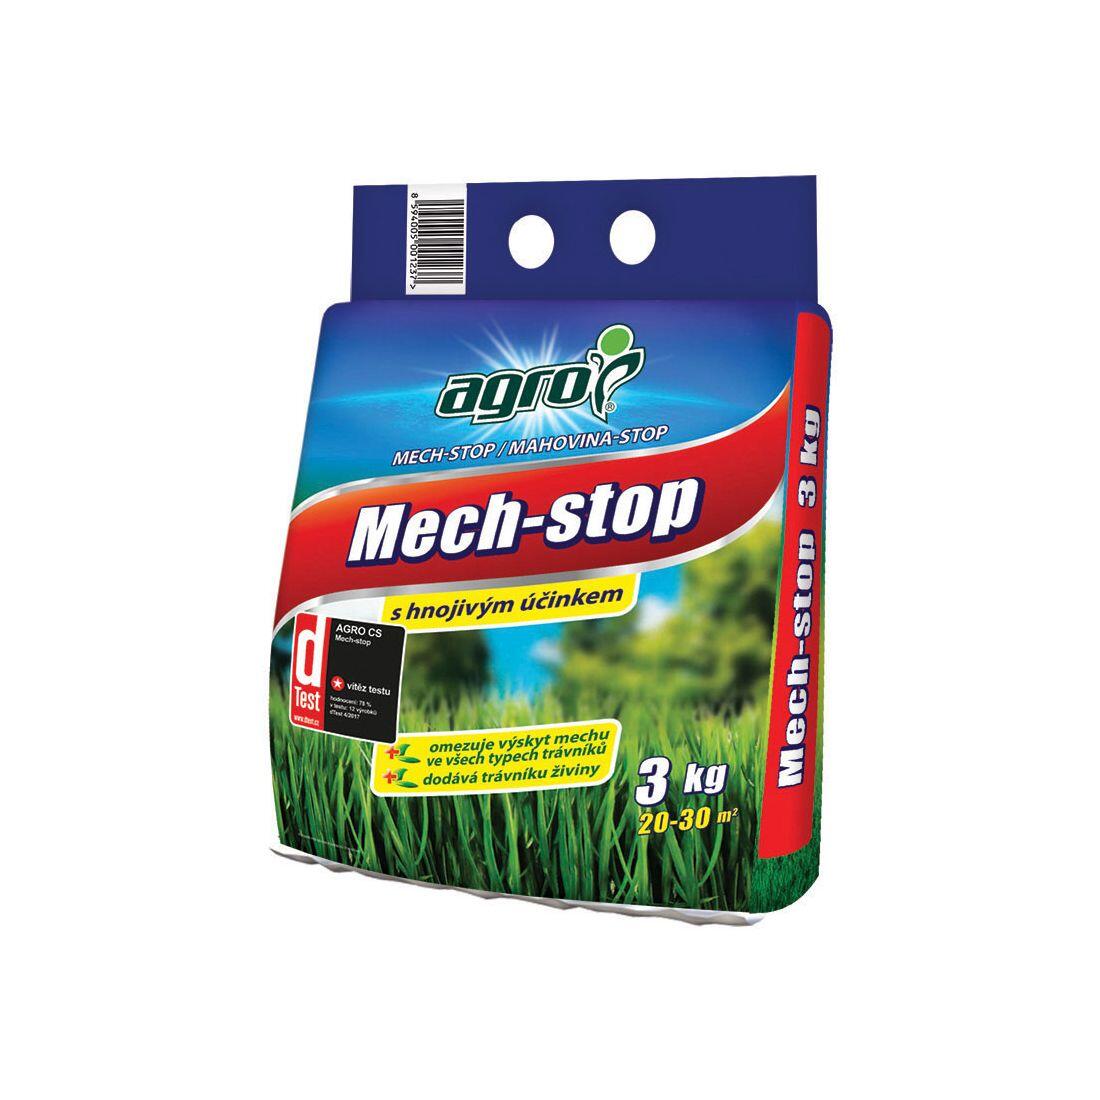 Mech-stop sáček s uchem 3kg AGRO 3.03 Kg MAXMIX Sklad14 912599 172